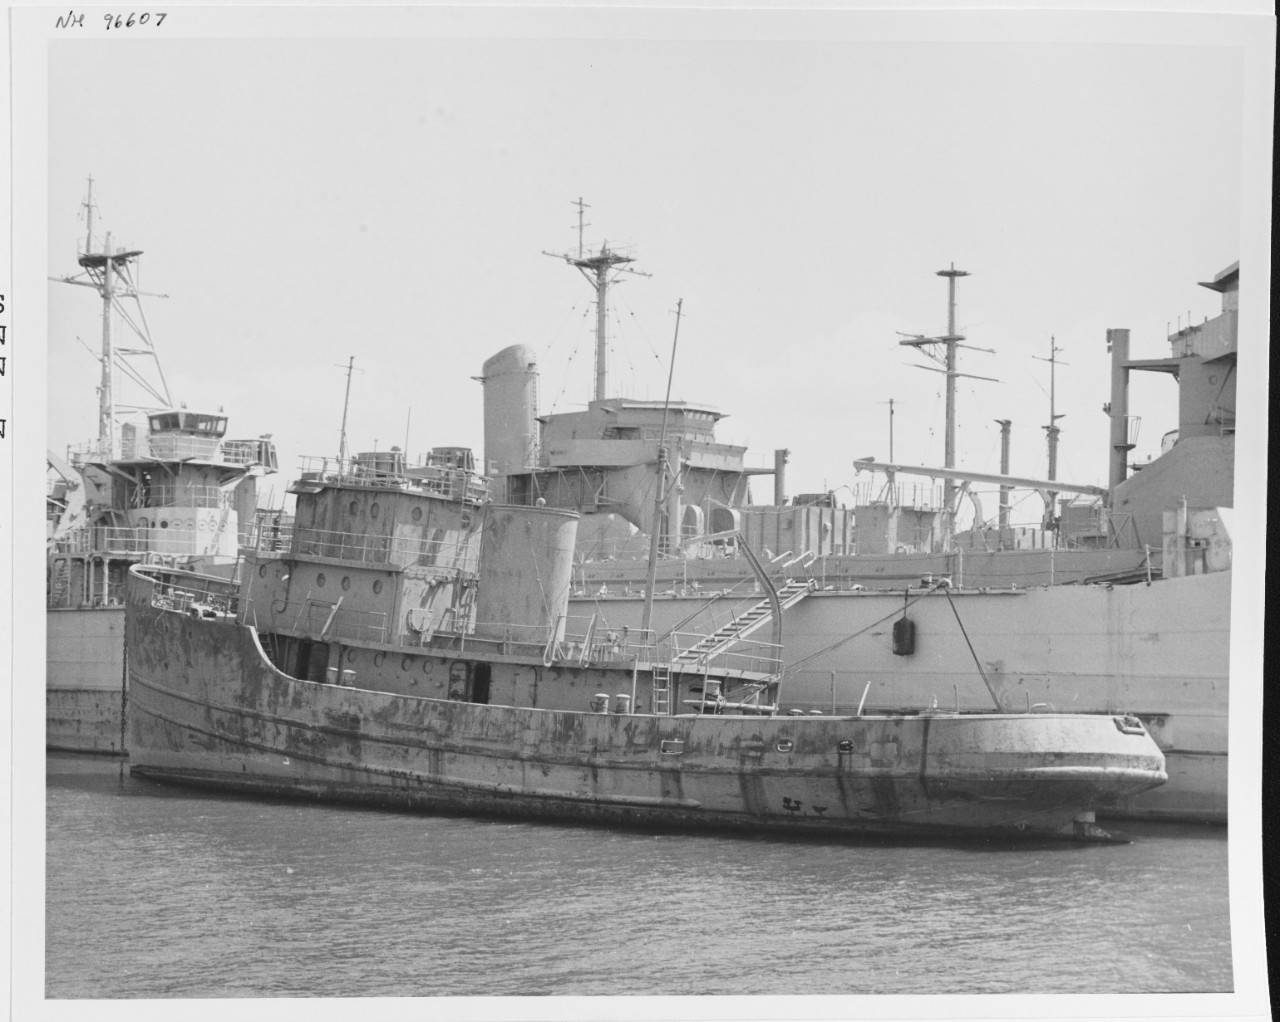 Ex-USS TUSCARORA (ATA-245)